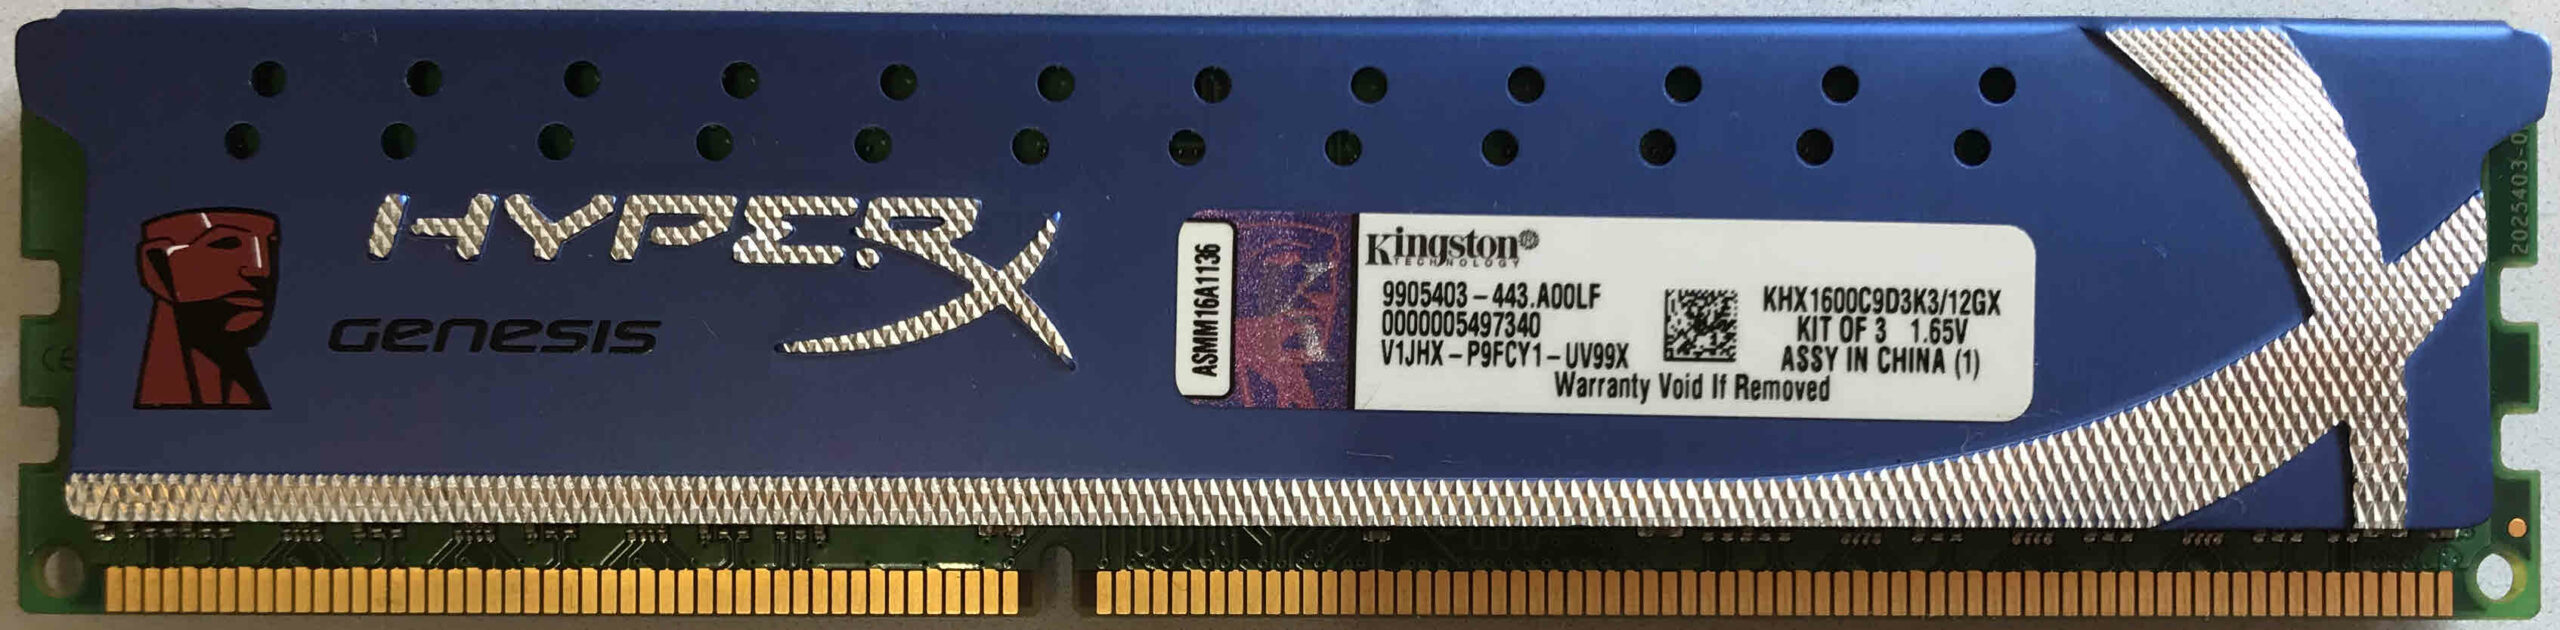 4GB PC3-12800U Kingston HyperX